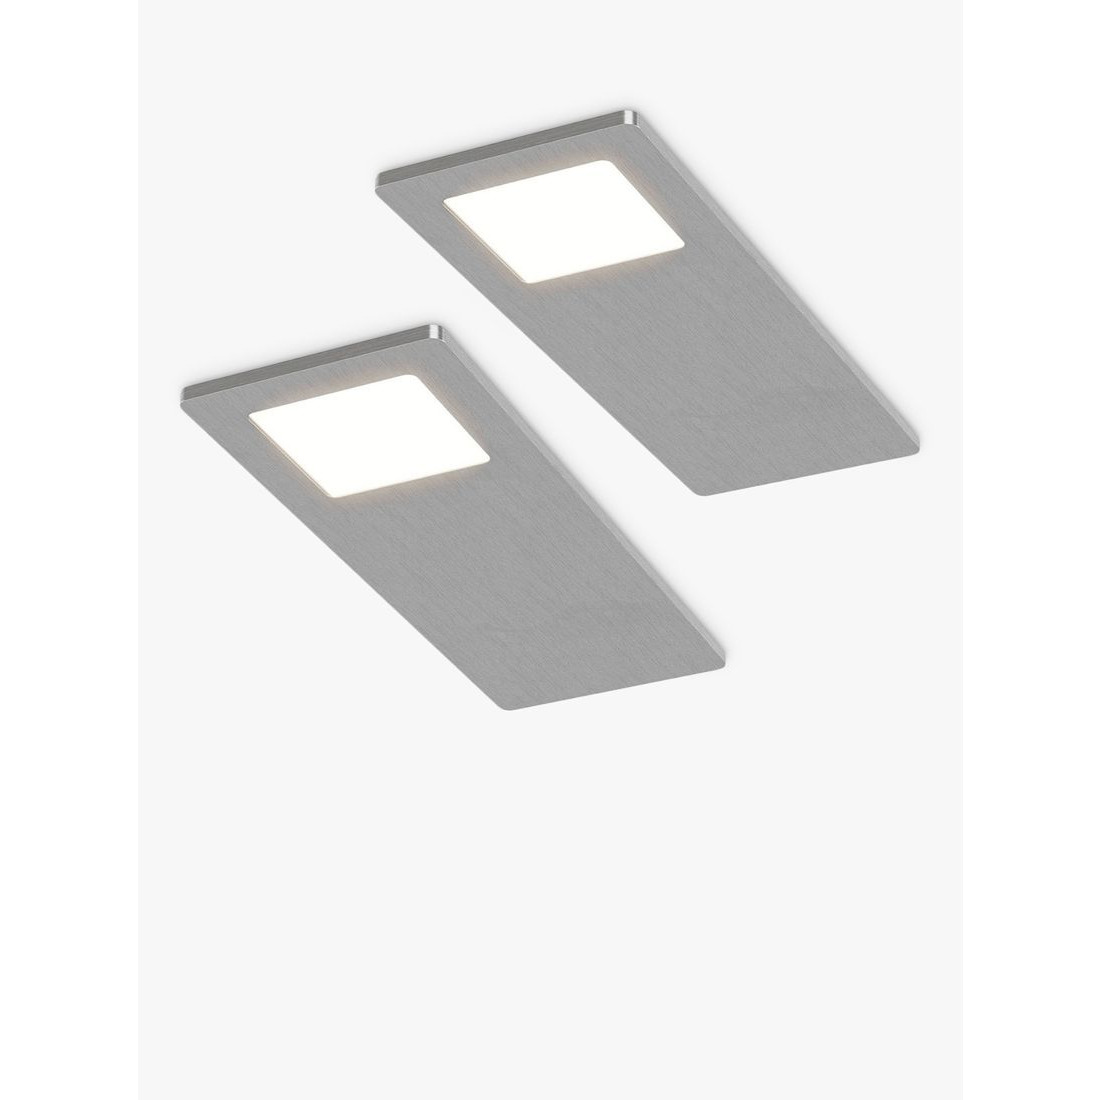 Sensio Velos LED Under Kitchen Cabinet Light, Pack of 2, Natural White Light - image 1